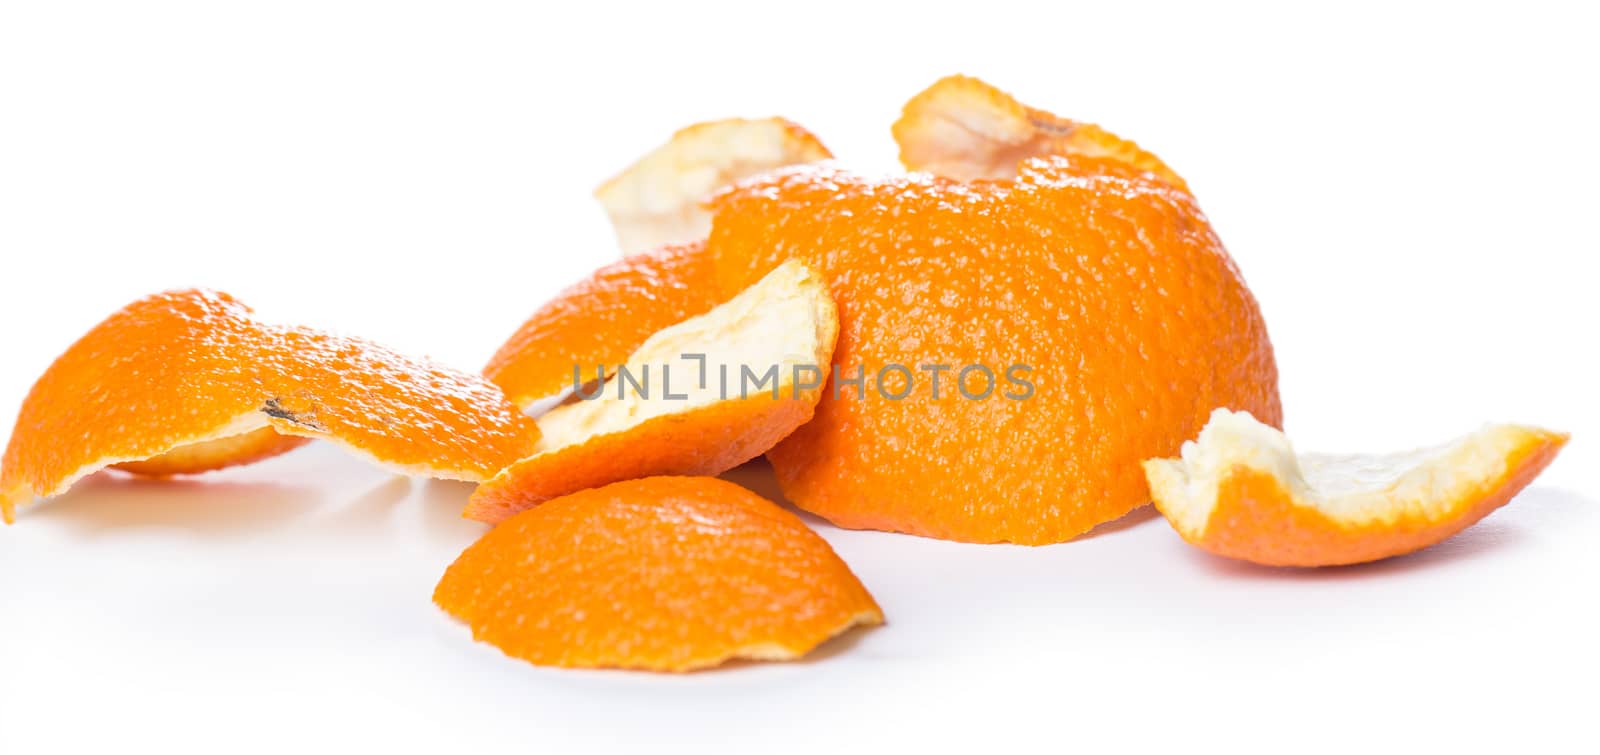 Orange being peeled with its skin around